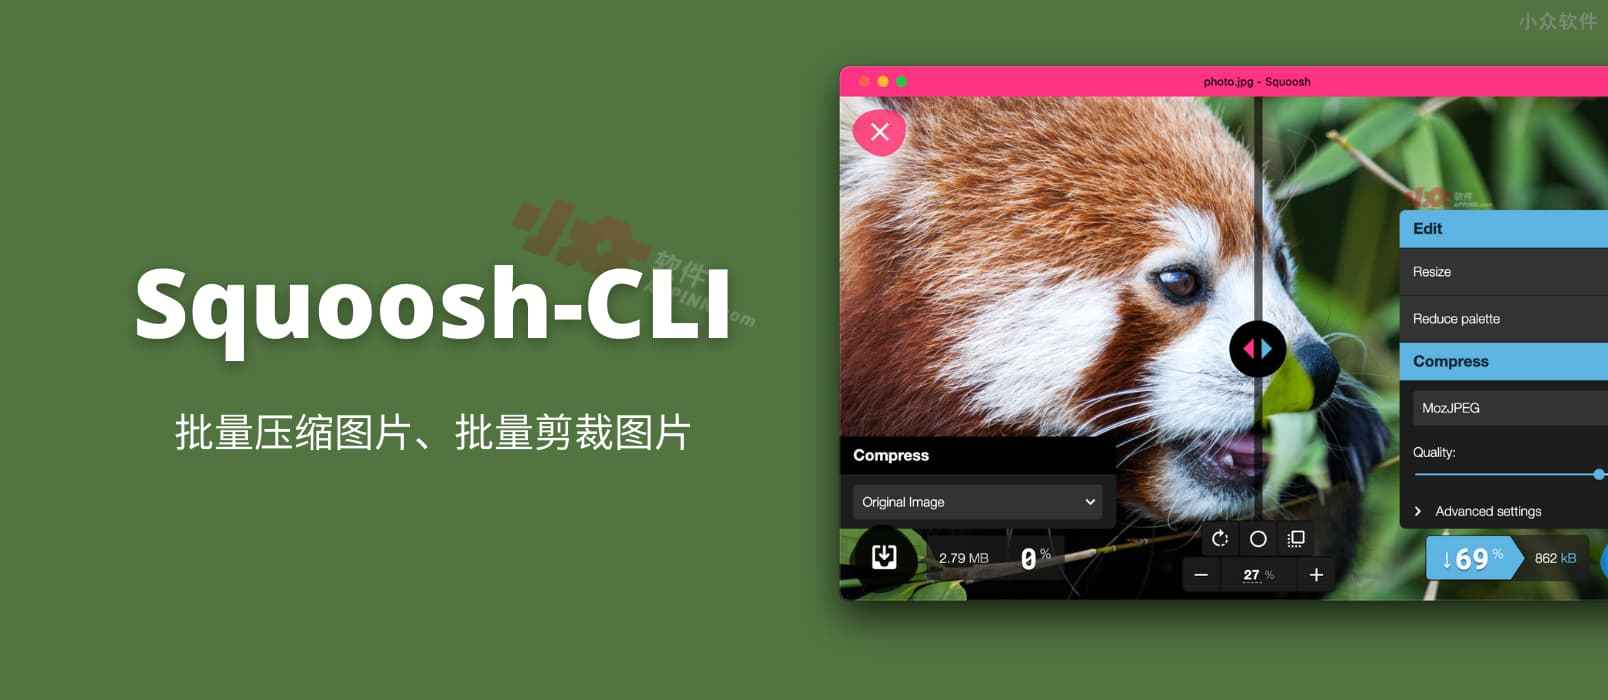 Squoosh-CLI – 批量图片压缩、批量图片格式转换、批量图片剪裁